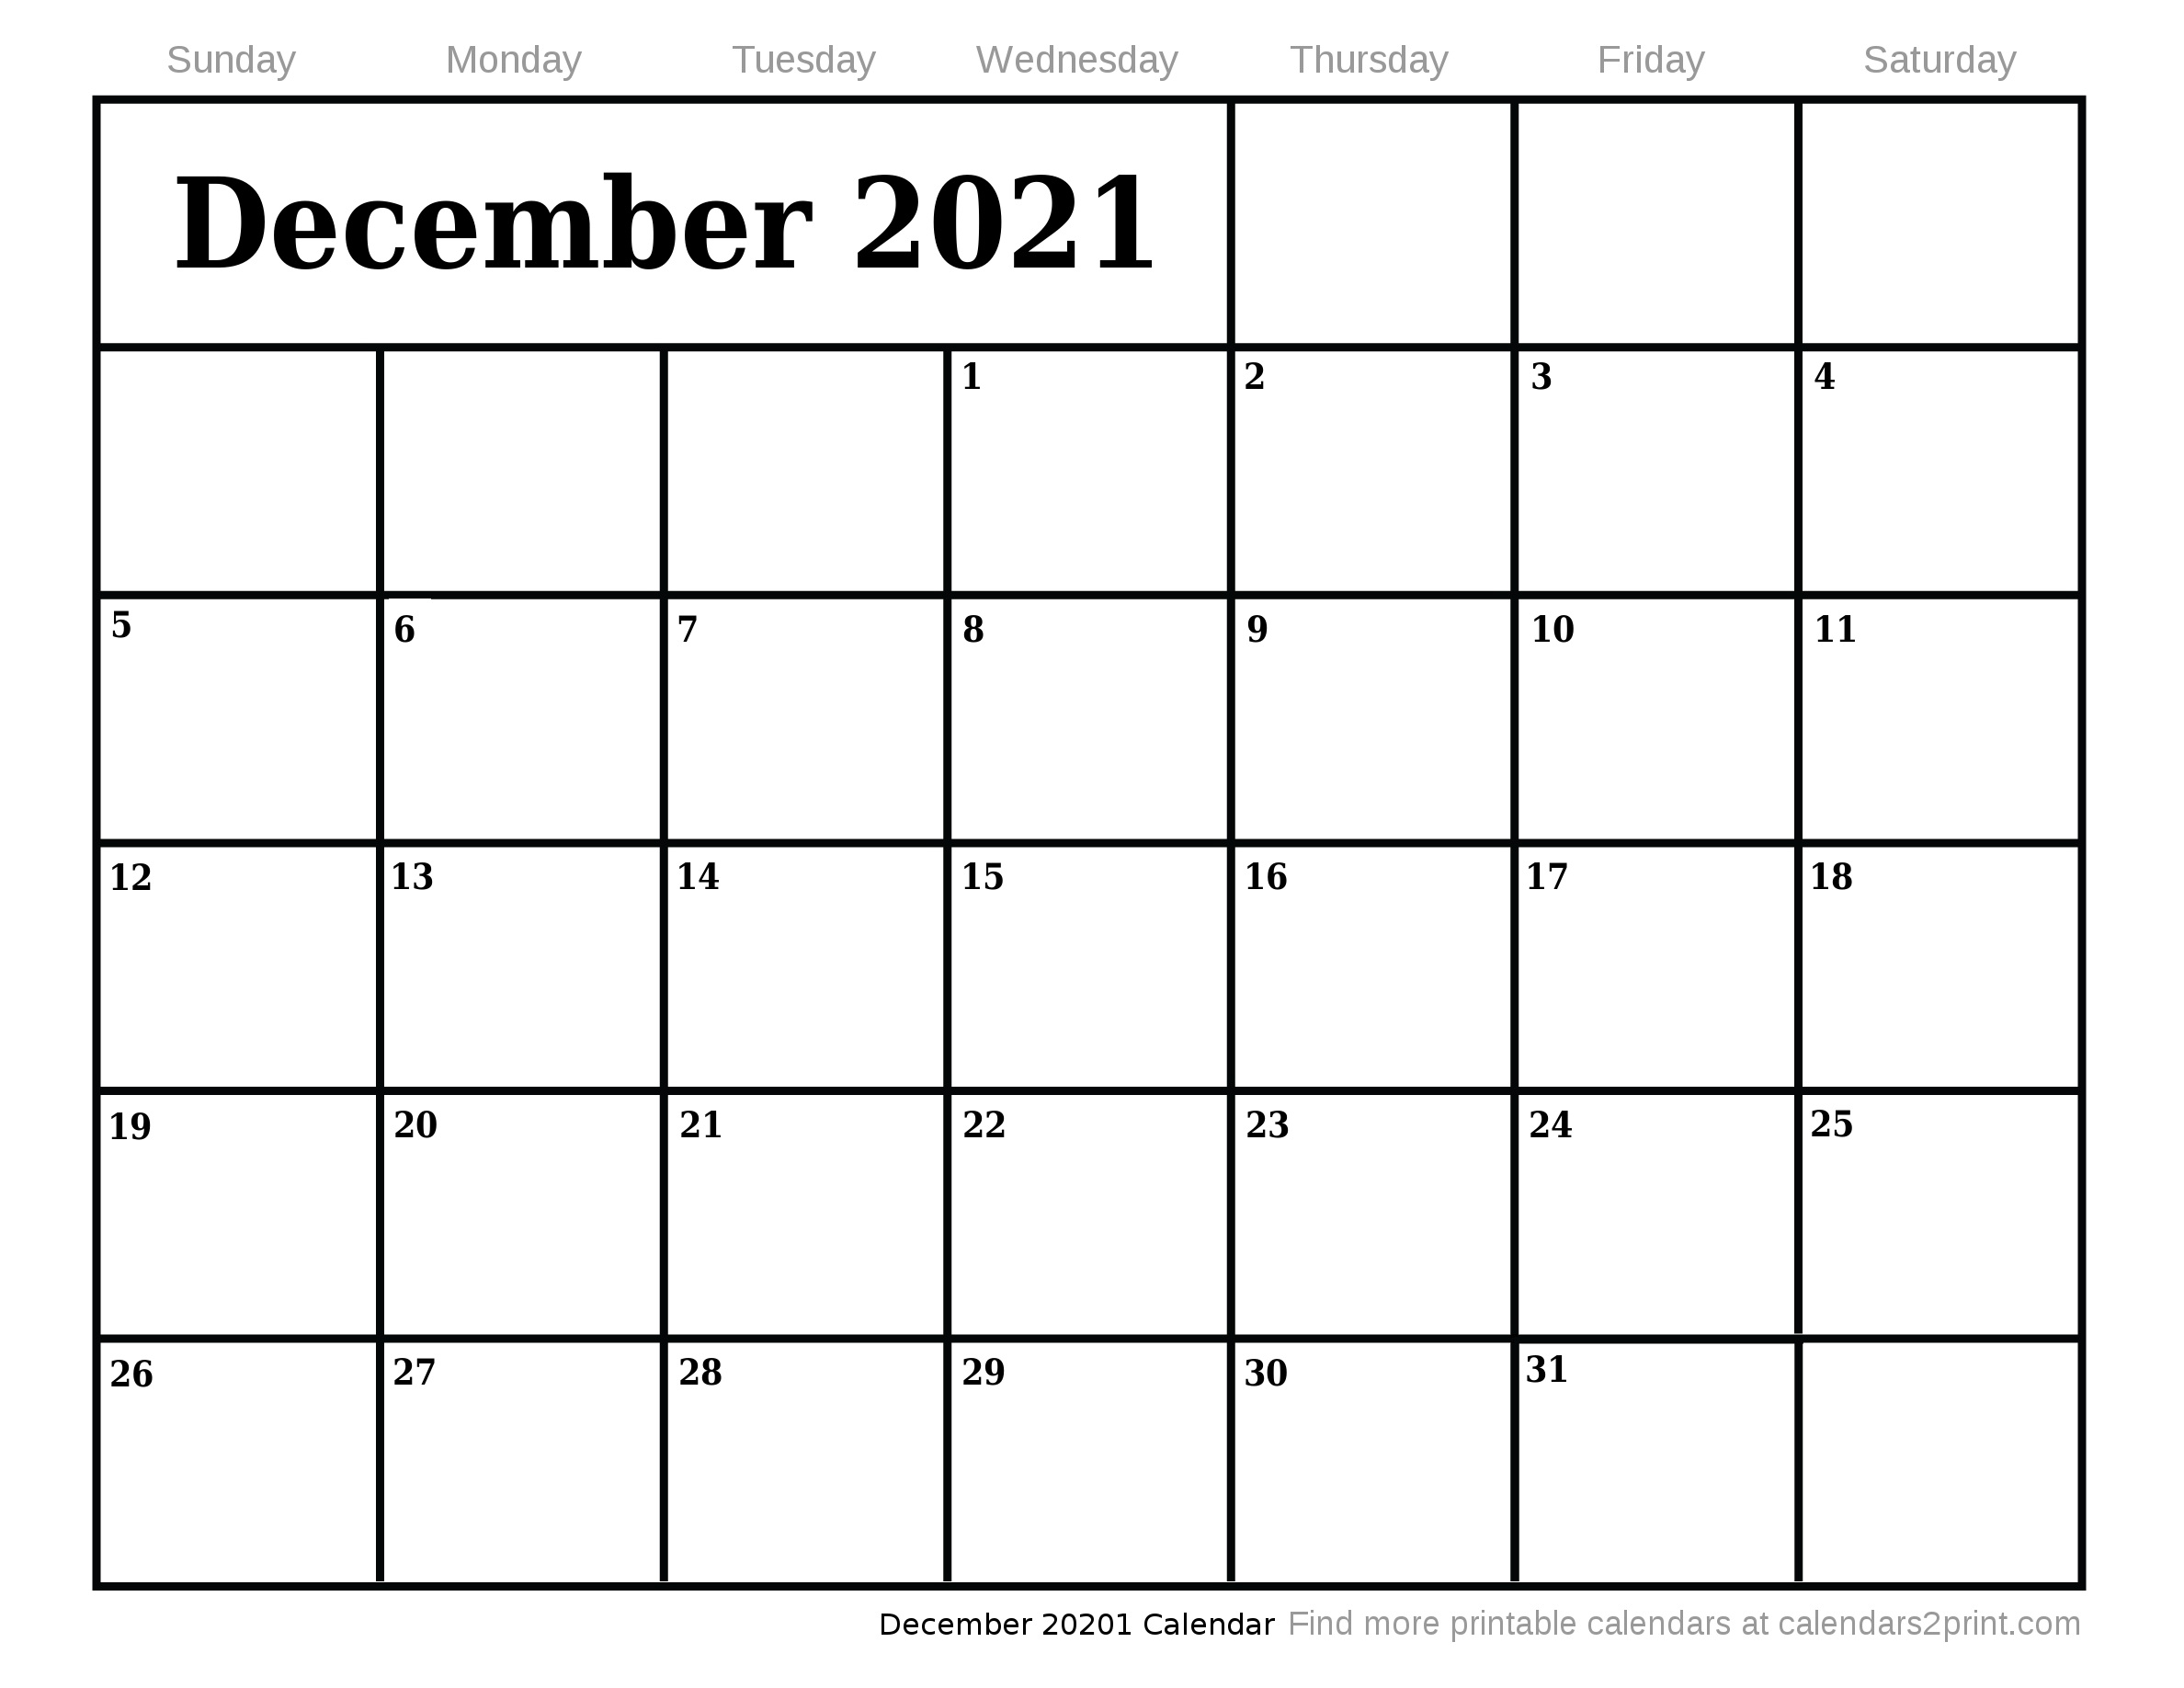 Dec 2021 Printable Calendar